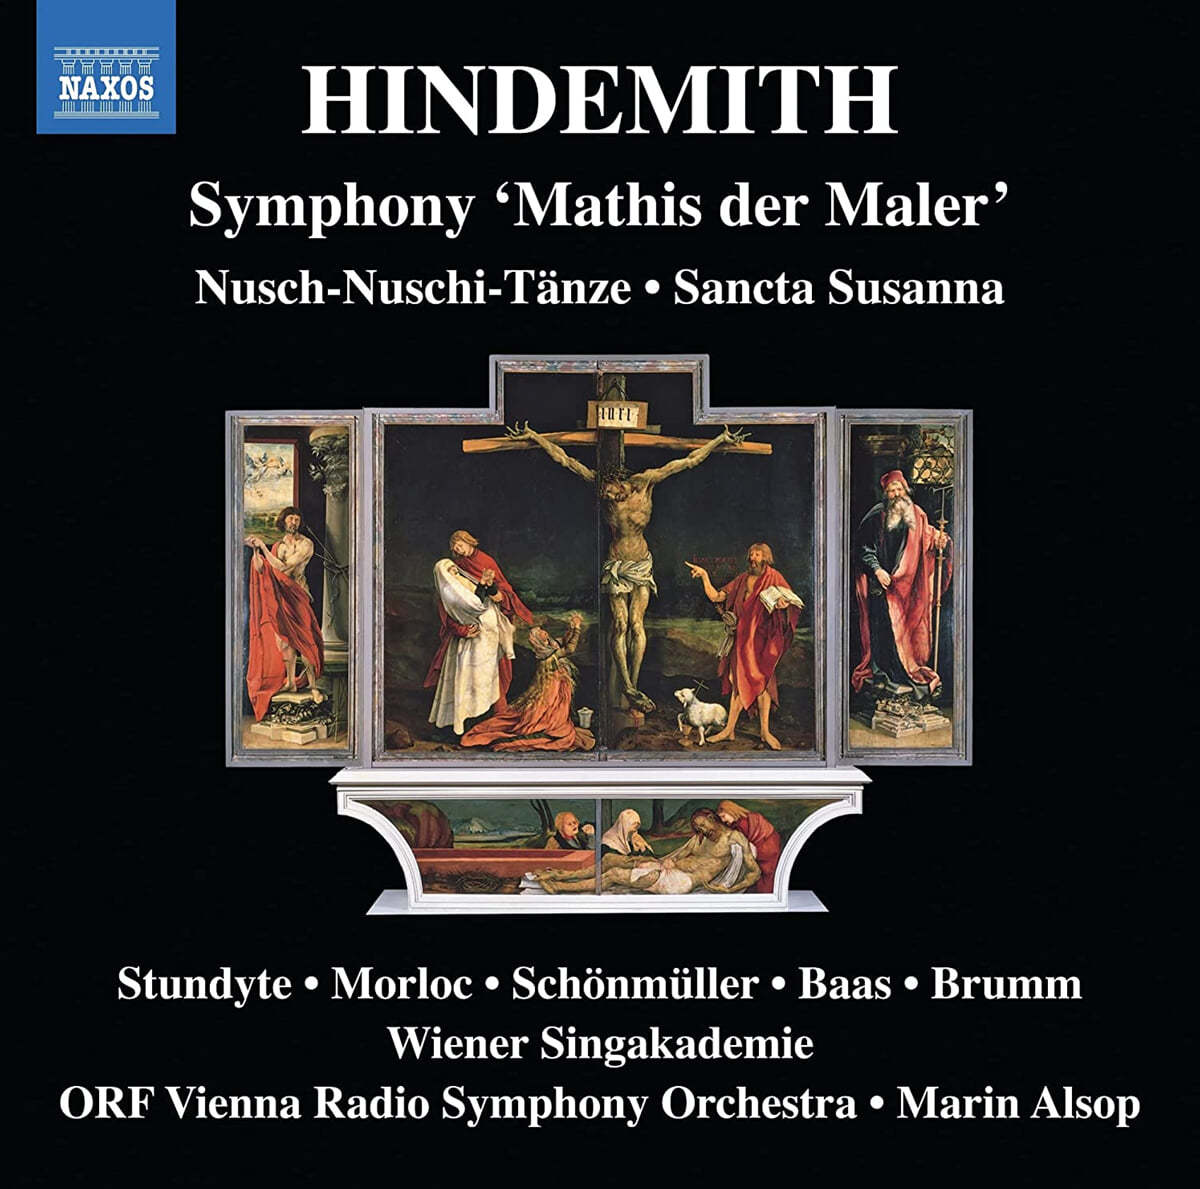 Marin Alsop 파울 힌데미트: 누슈-니시 춤곡, 성녀 수잔나, '화가 마티스' 교향곡 (Paul Hindemith: Nusch-Nuschi-Tanze, Sancta Susanna Op.21, Symphony 'Mathis der Maler') 